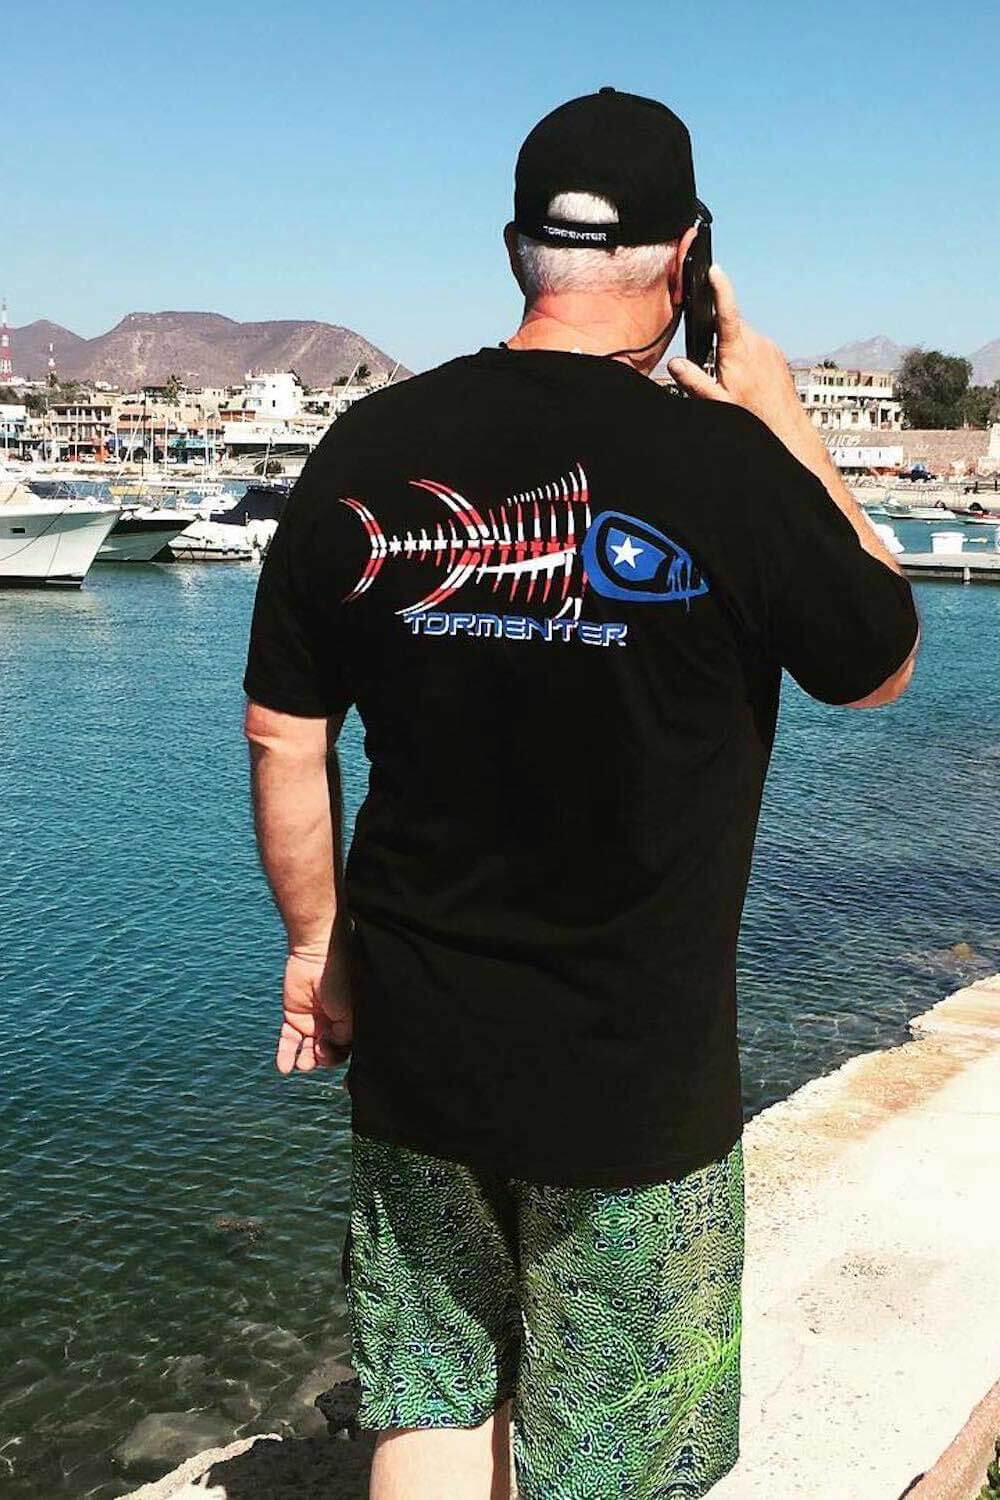 Patriot Black Men's Fishing T-Shirt - Tormenter Ocean Fishing Gear Apparel Boating SPF Surfing Watersports